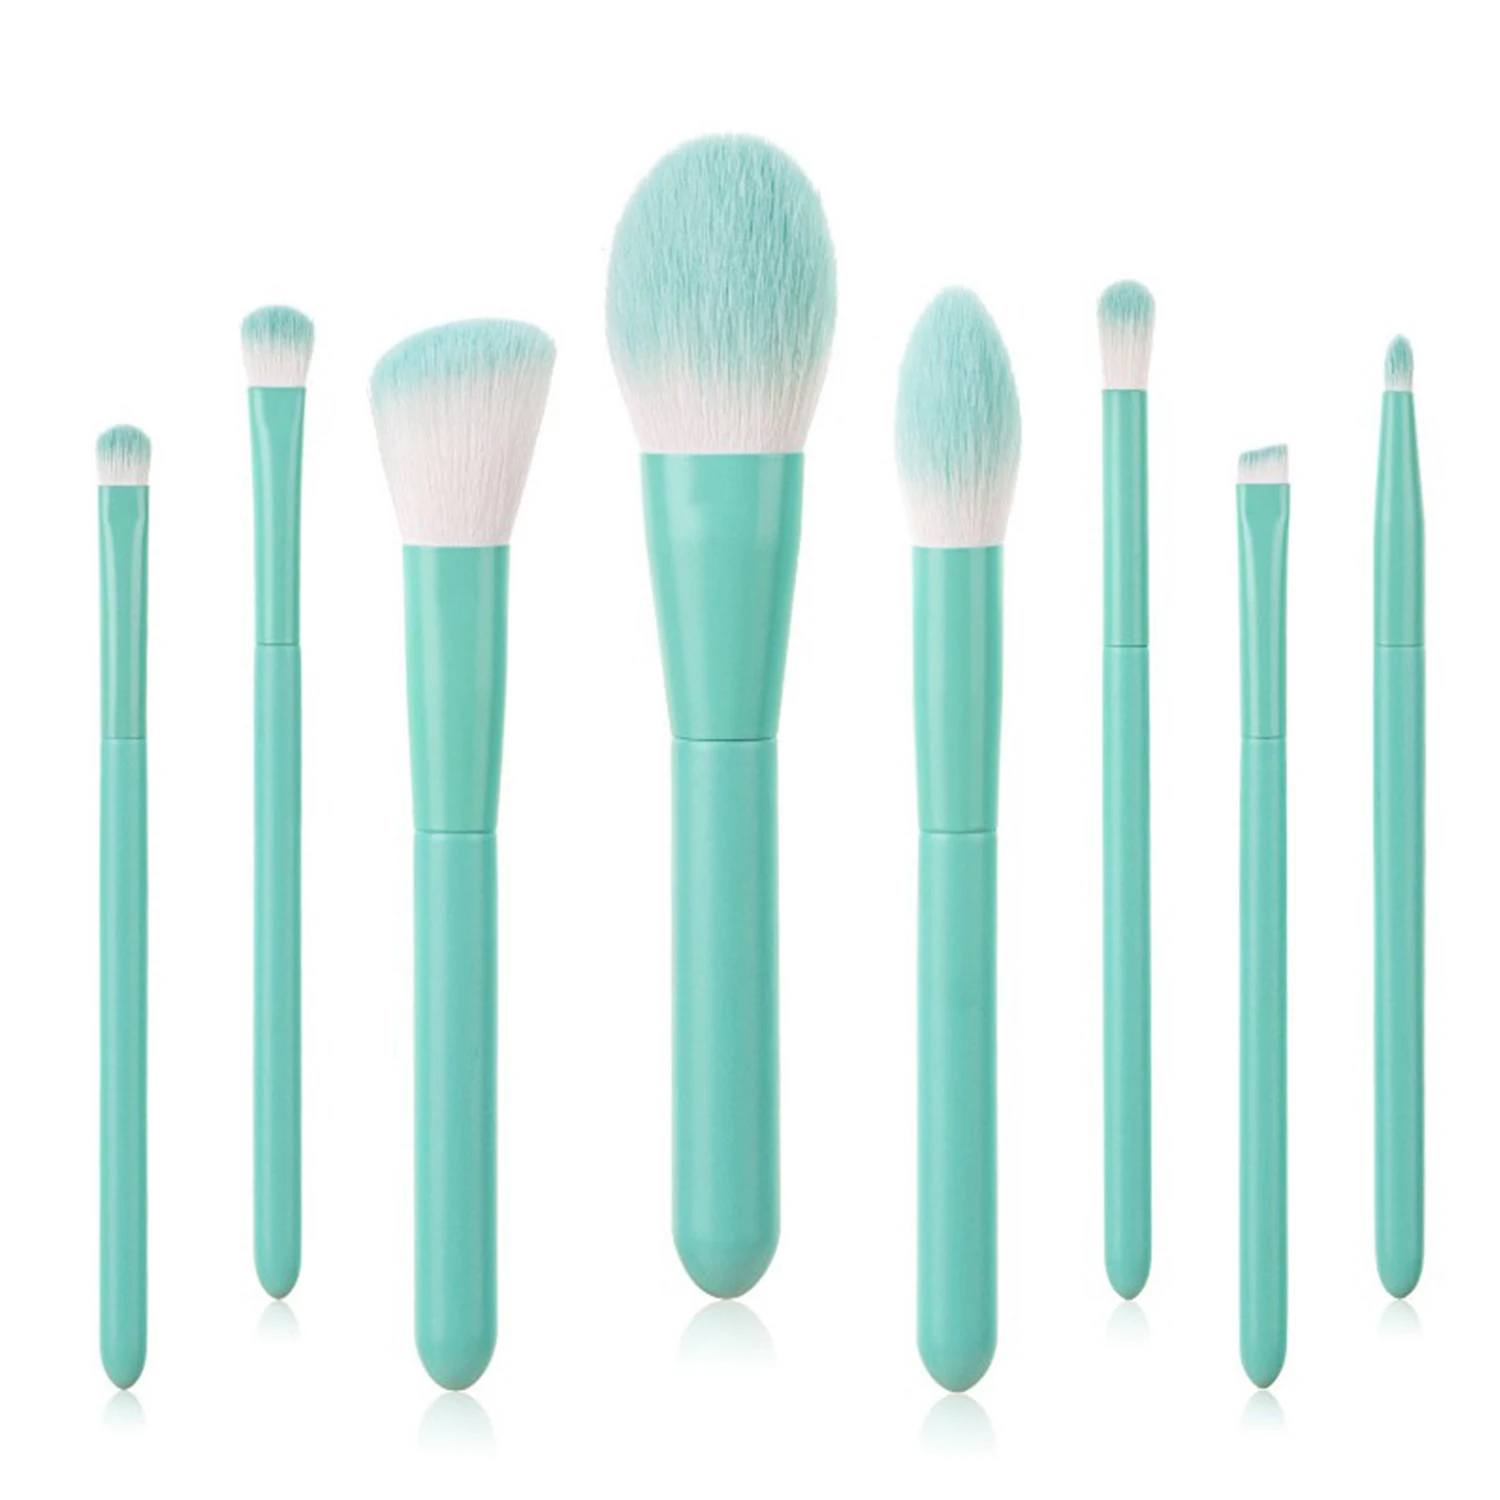 8 Pcs Colorful Makeup Brushes Set Eye Face Cosmetic Foundation Powder Blush Eyeshadow Kabuki Blending Makeup Brush Beauty Tool